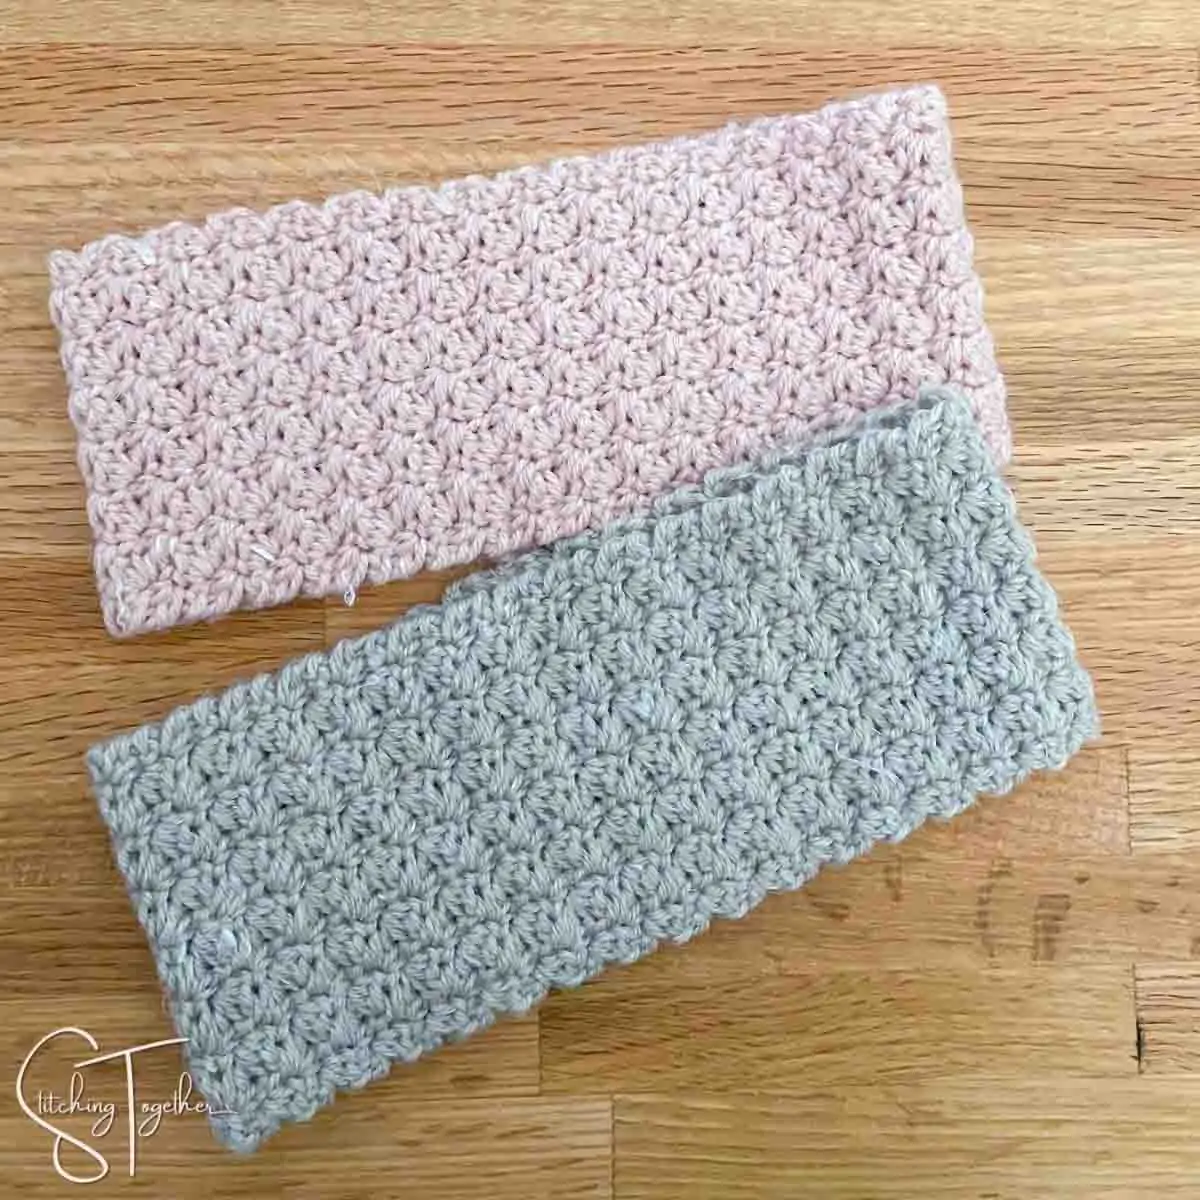 2 textured crochet headbands laying flat